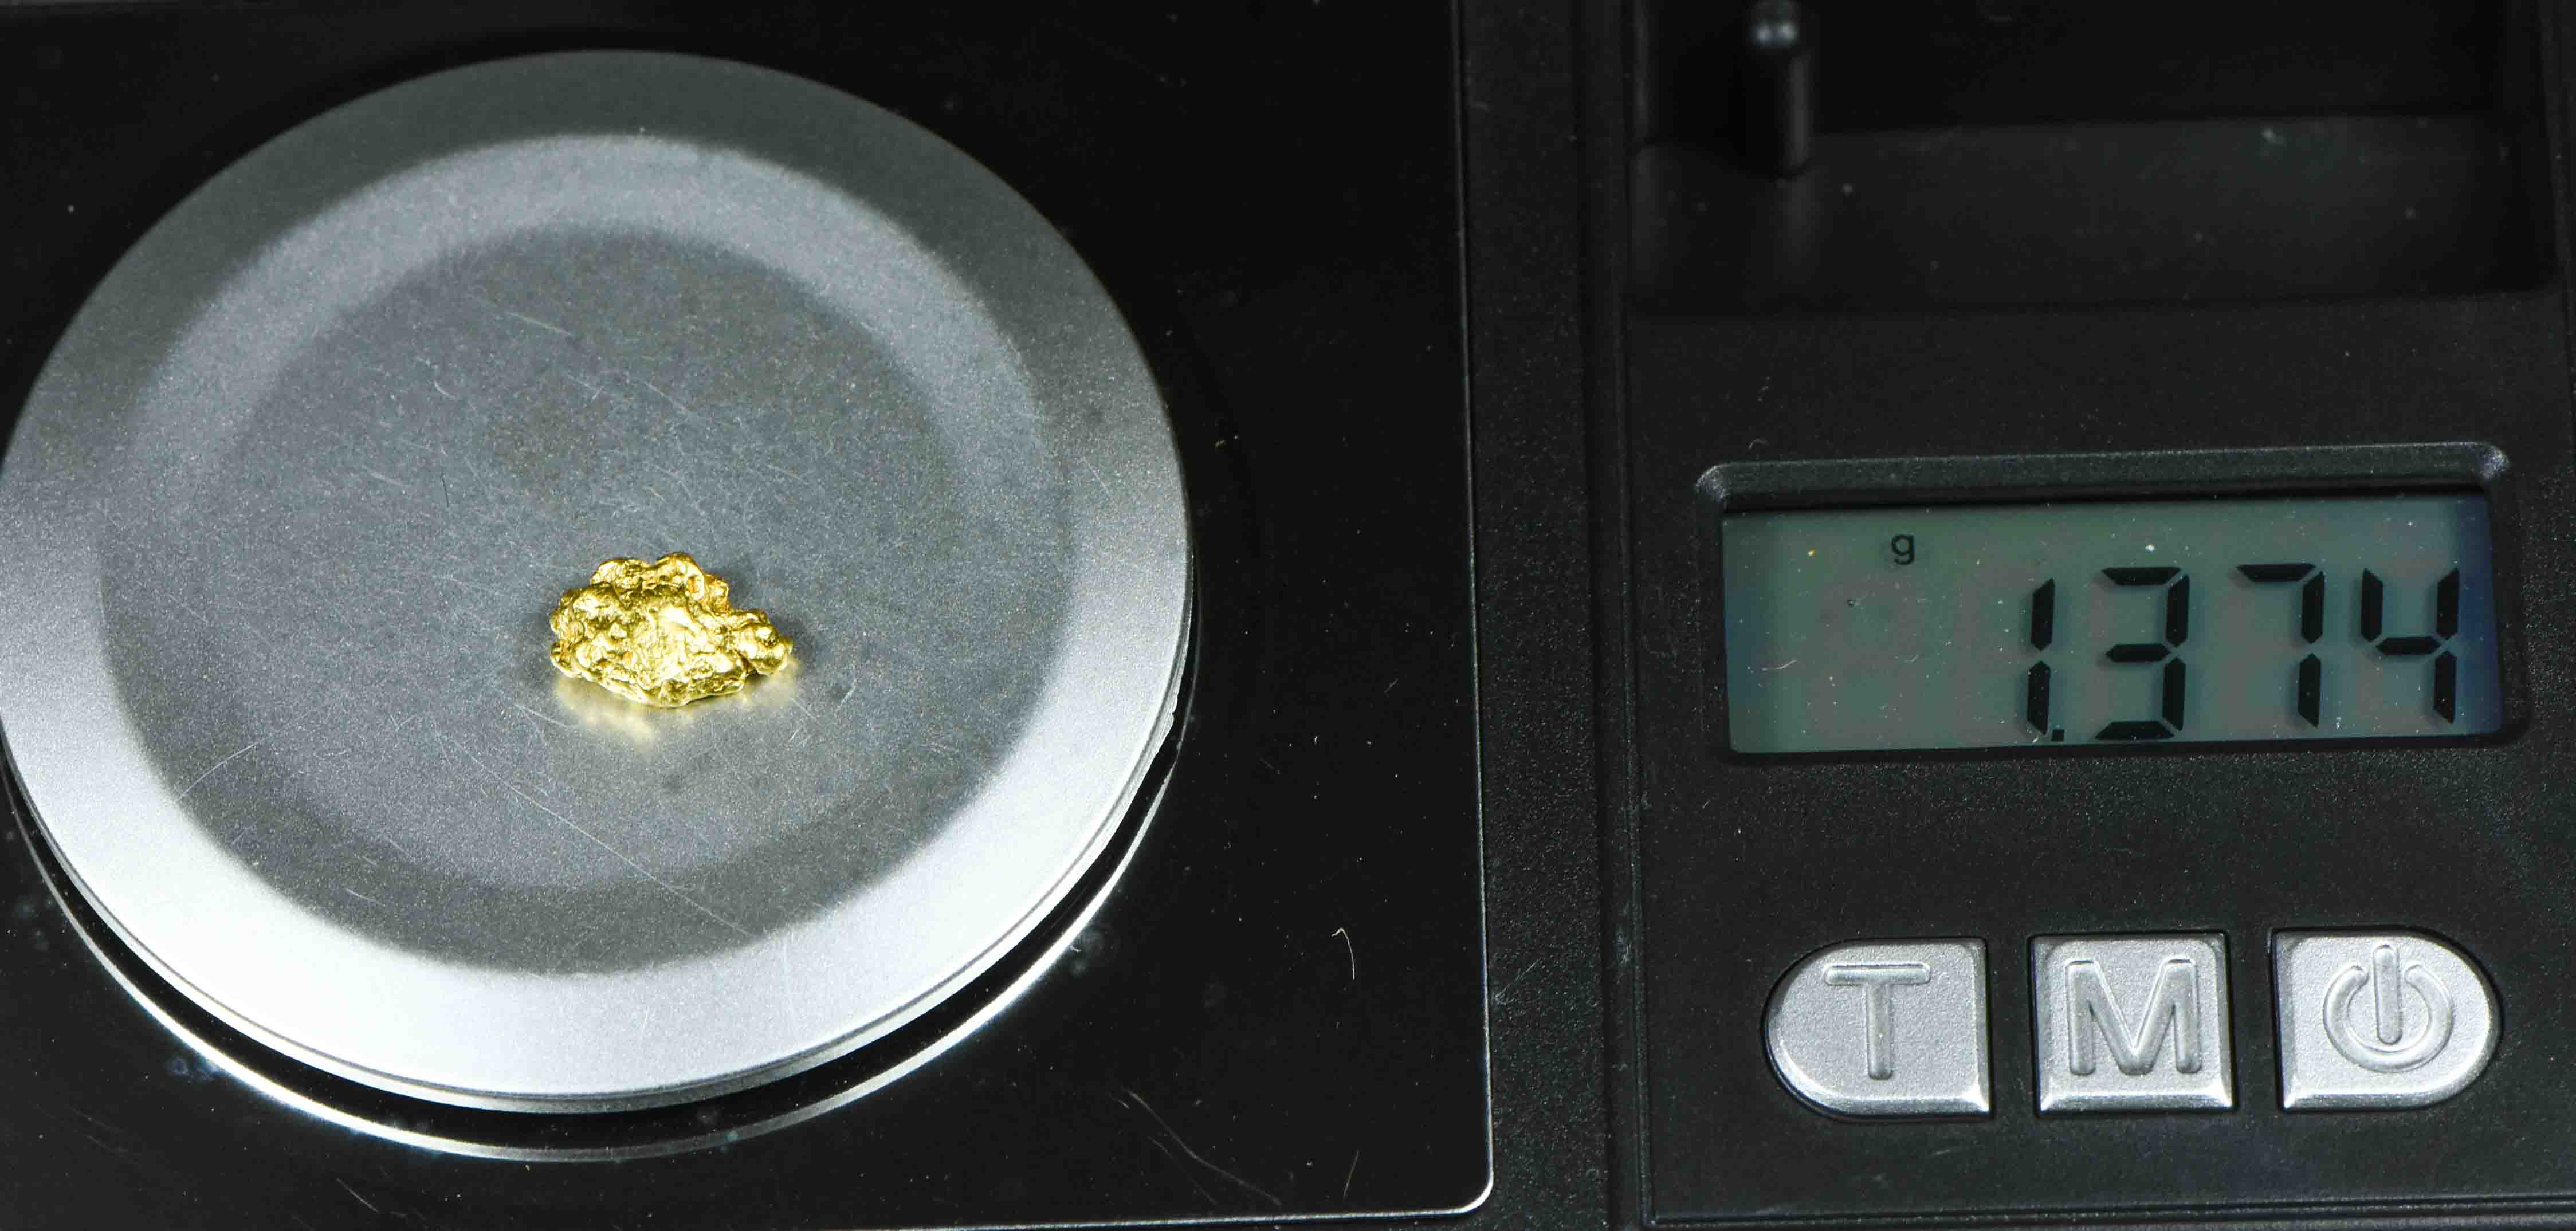 #74 Natural Gold Nugget Montana 1.37 Grams Genuine